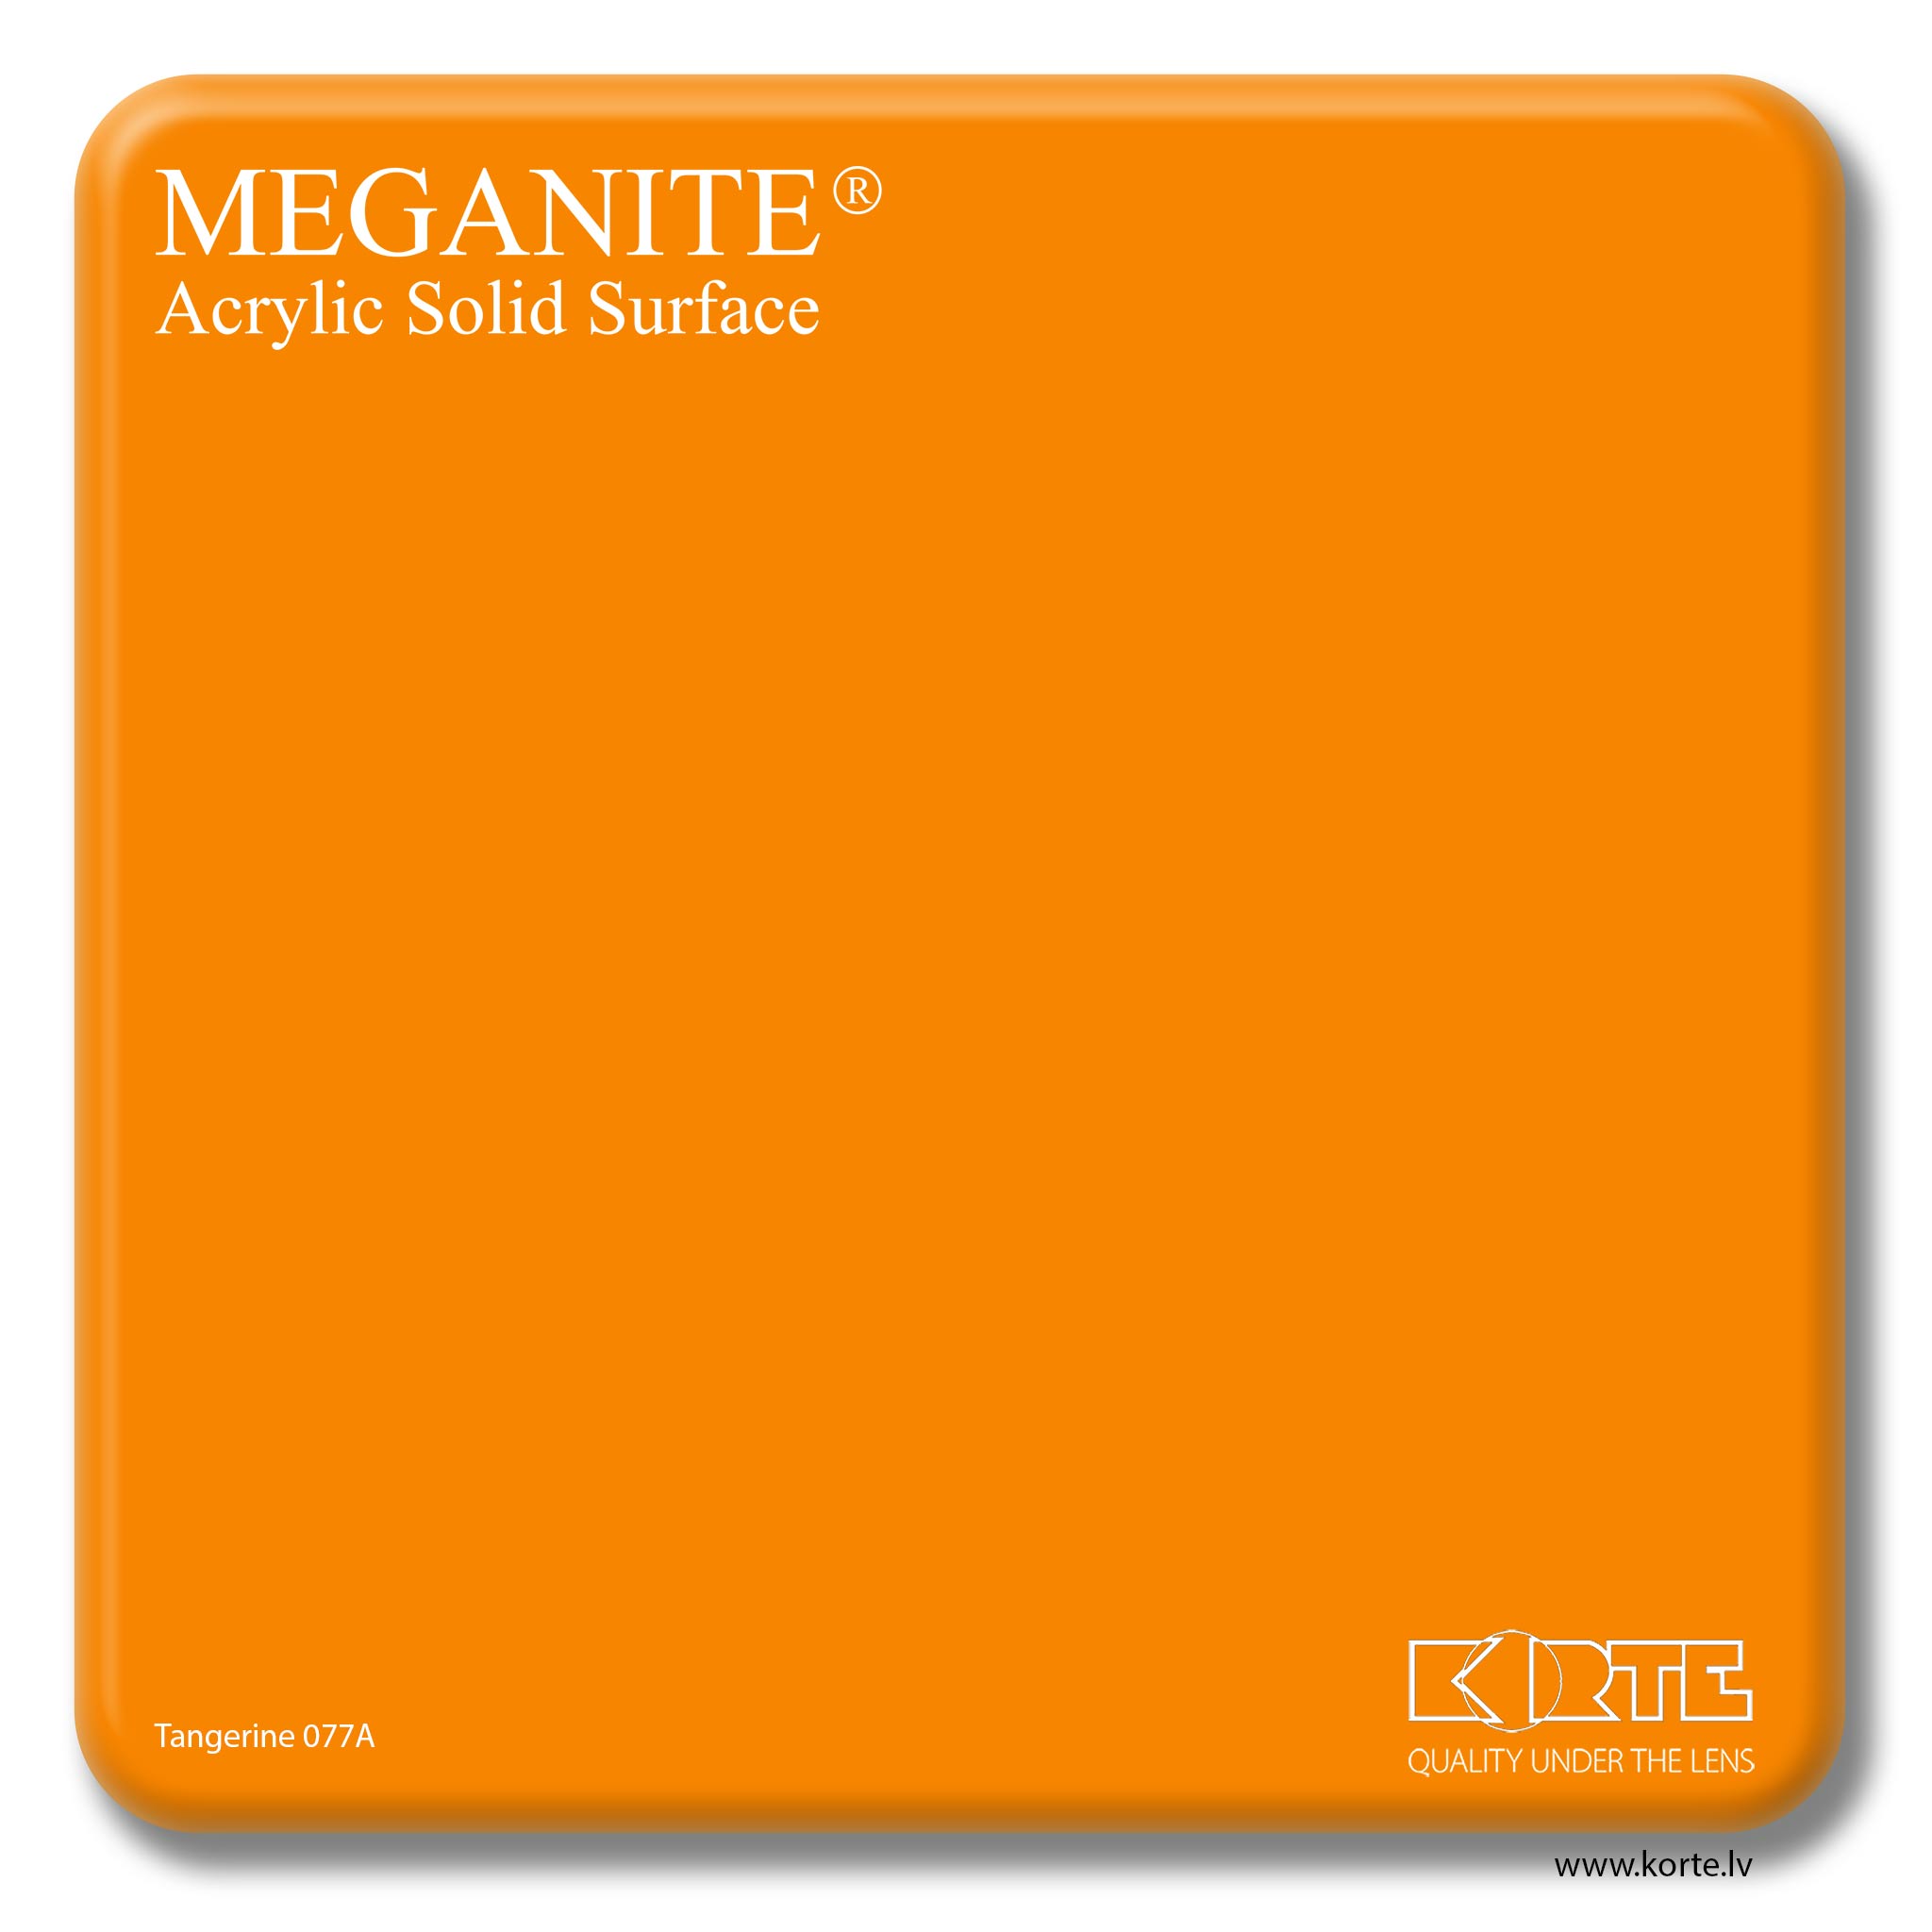 Meganite Tangerine 077A